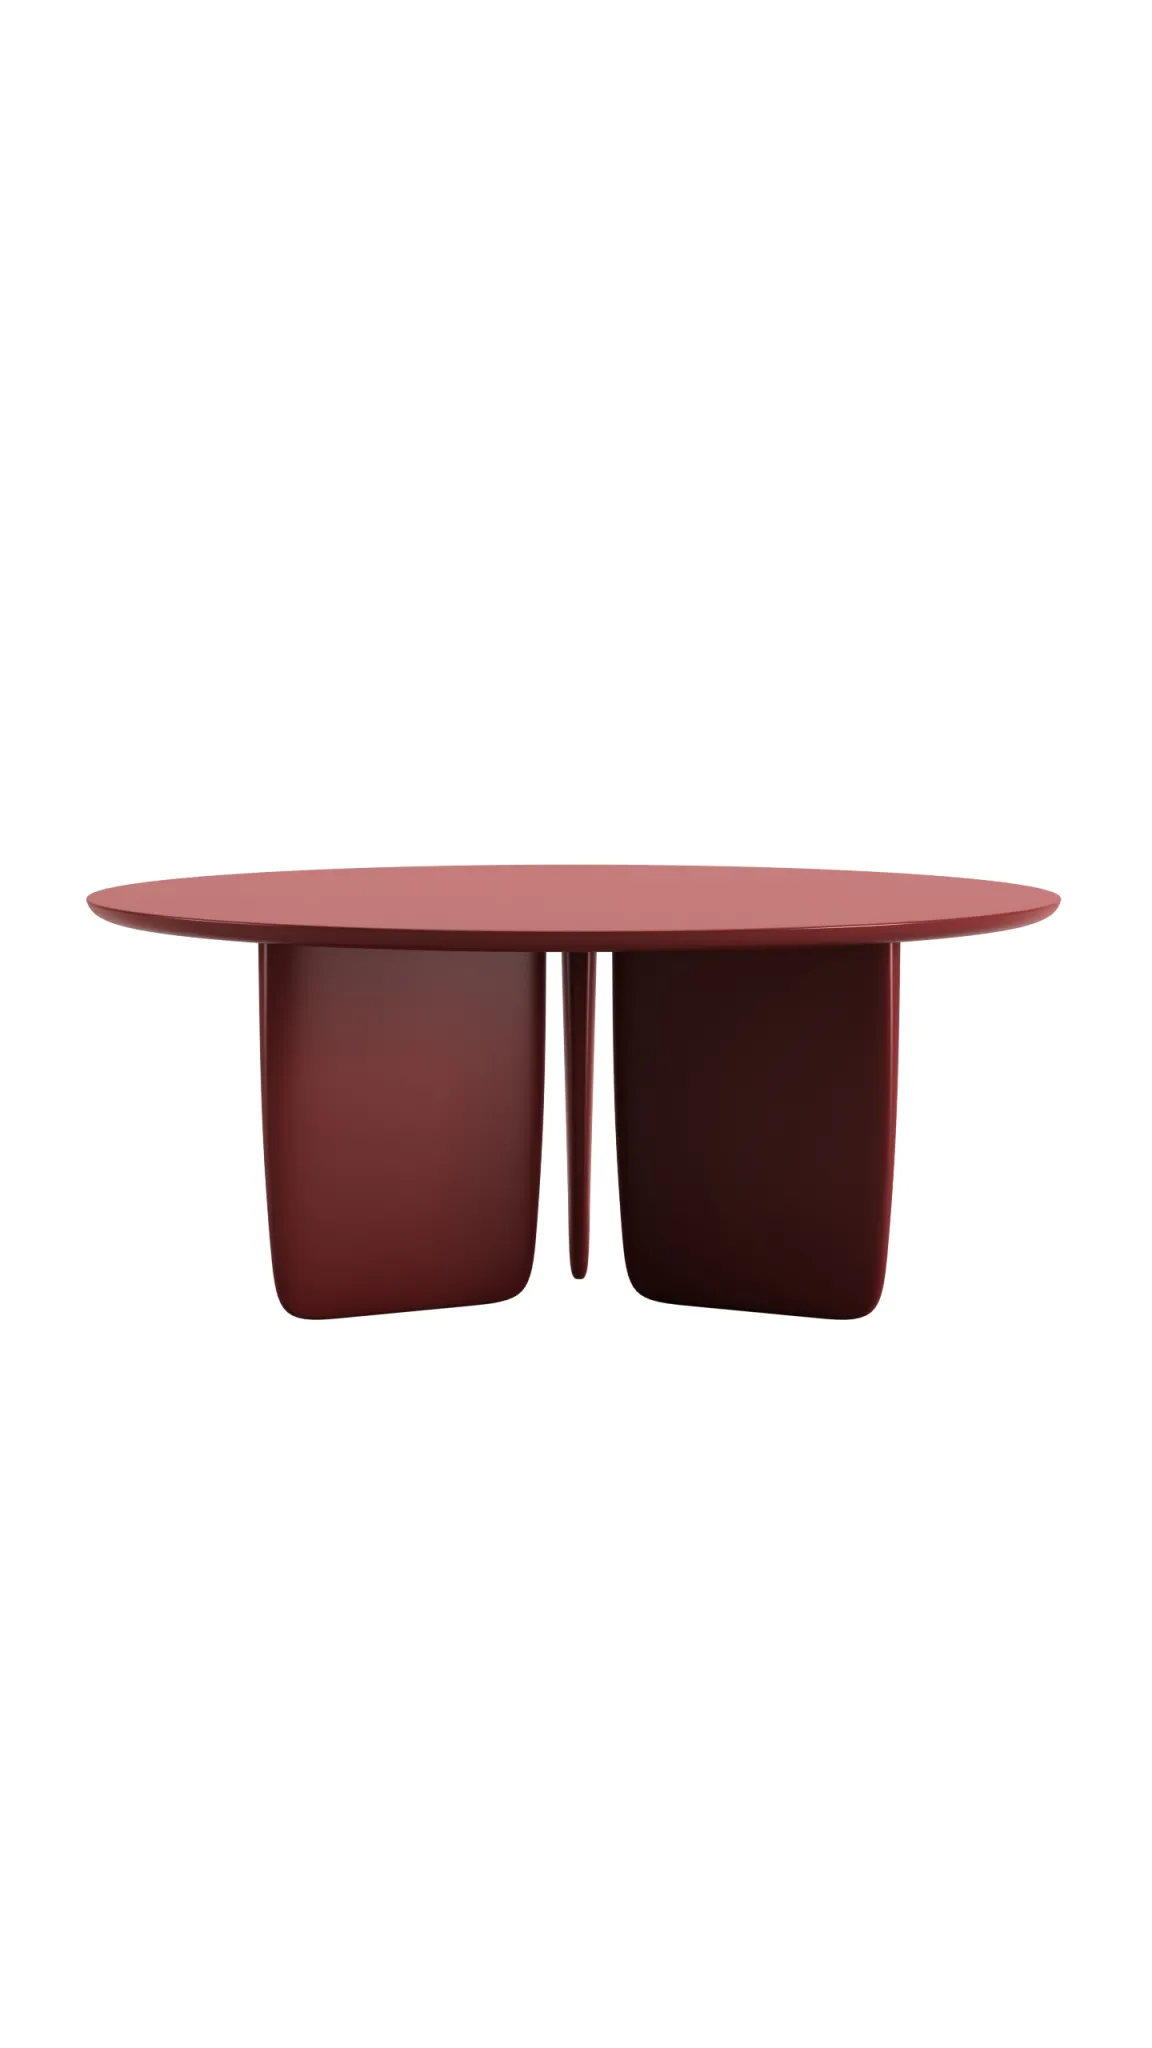 FURNITURE 3D MODELS – TABLES – 0185